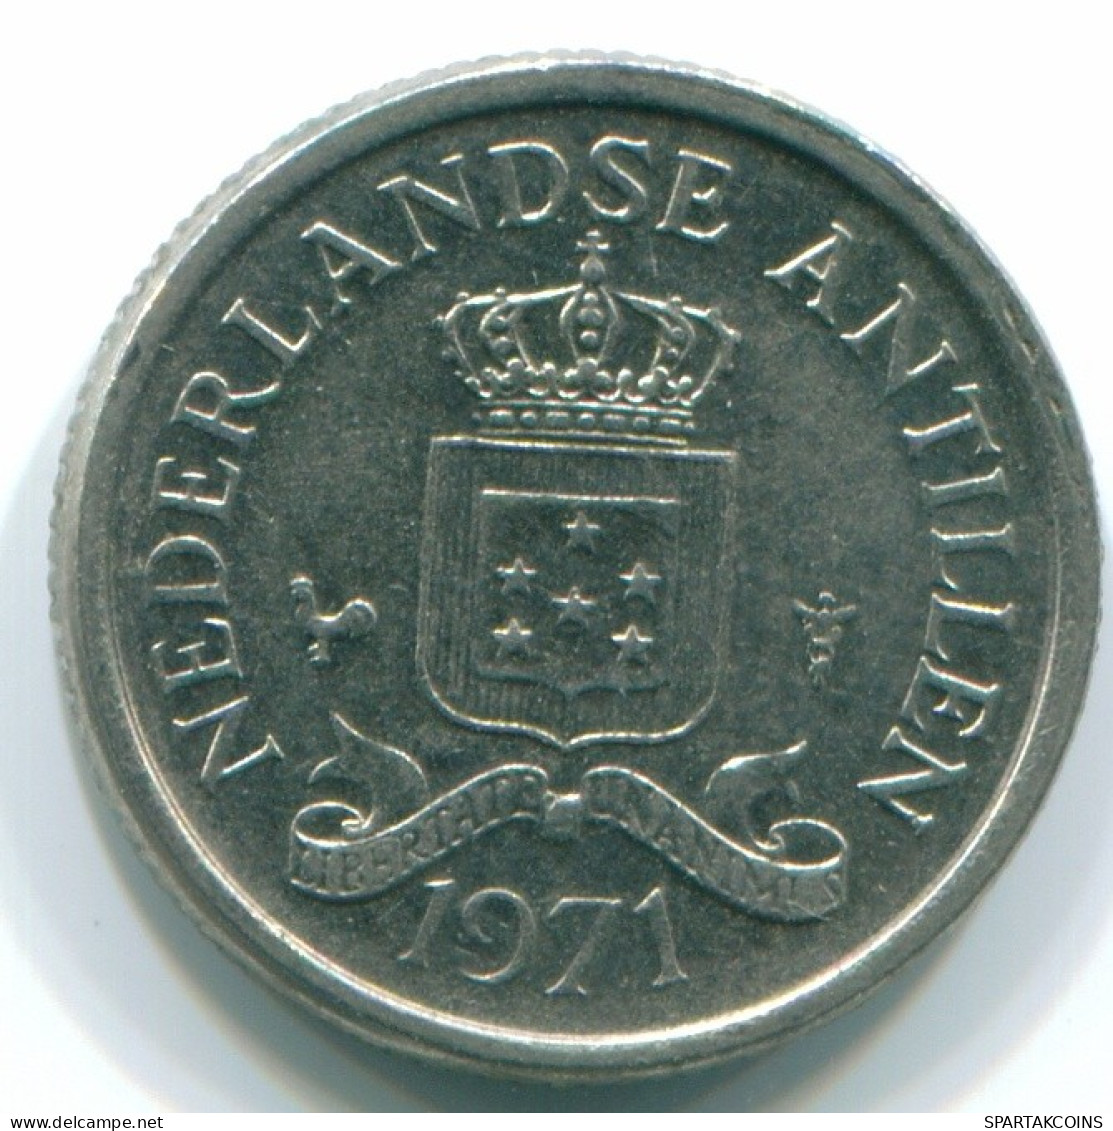 10 CENTS 1971 NETHERLANDS ANTILLES Nickel Colonial Coin #S13432.U.A - Antilles Néerlandaises